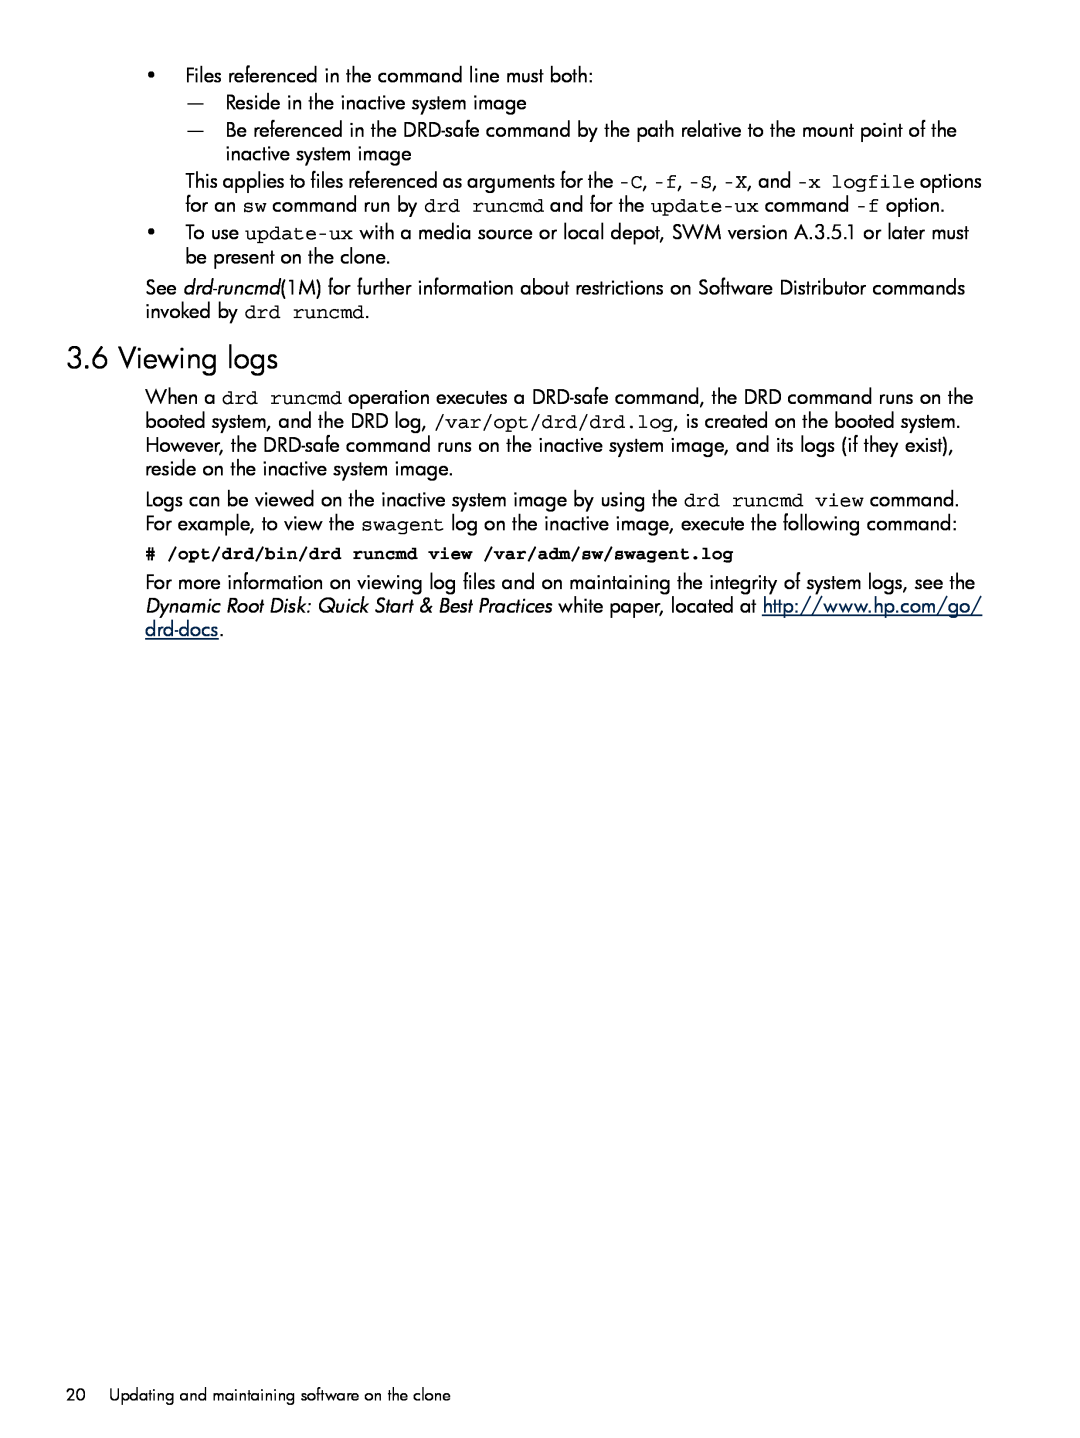 HP Dynamic Root Disk (DRD) manual Viewing logs 